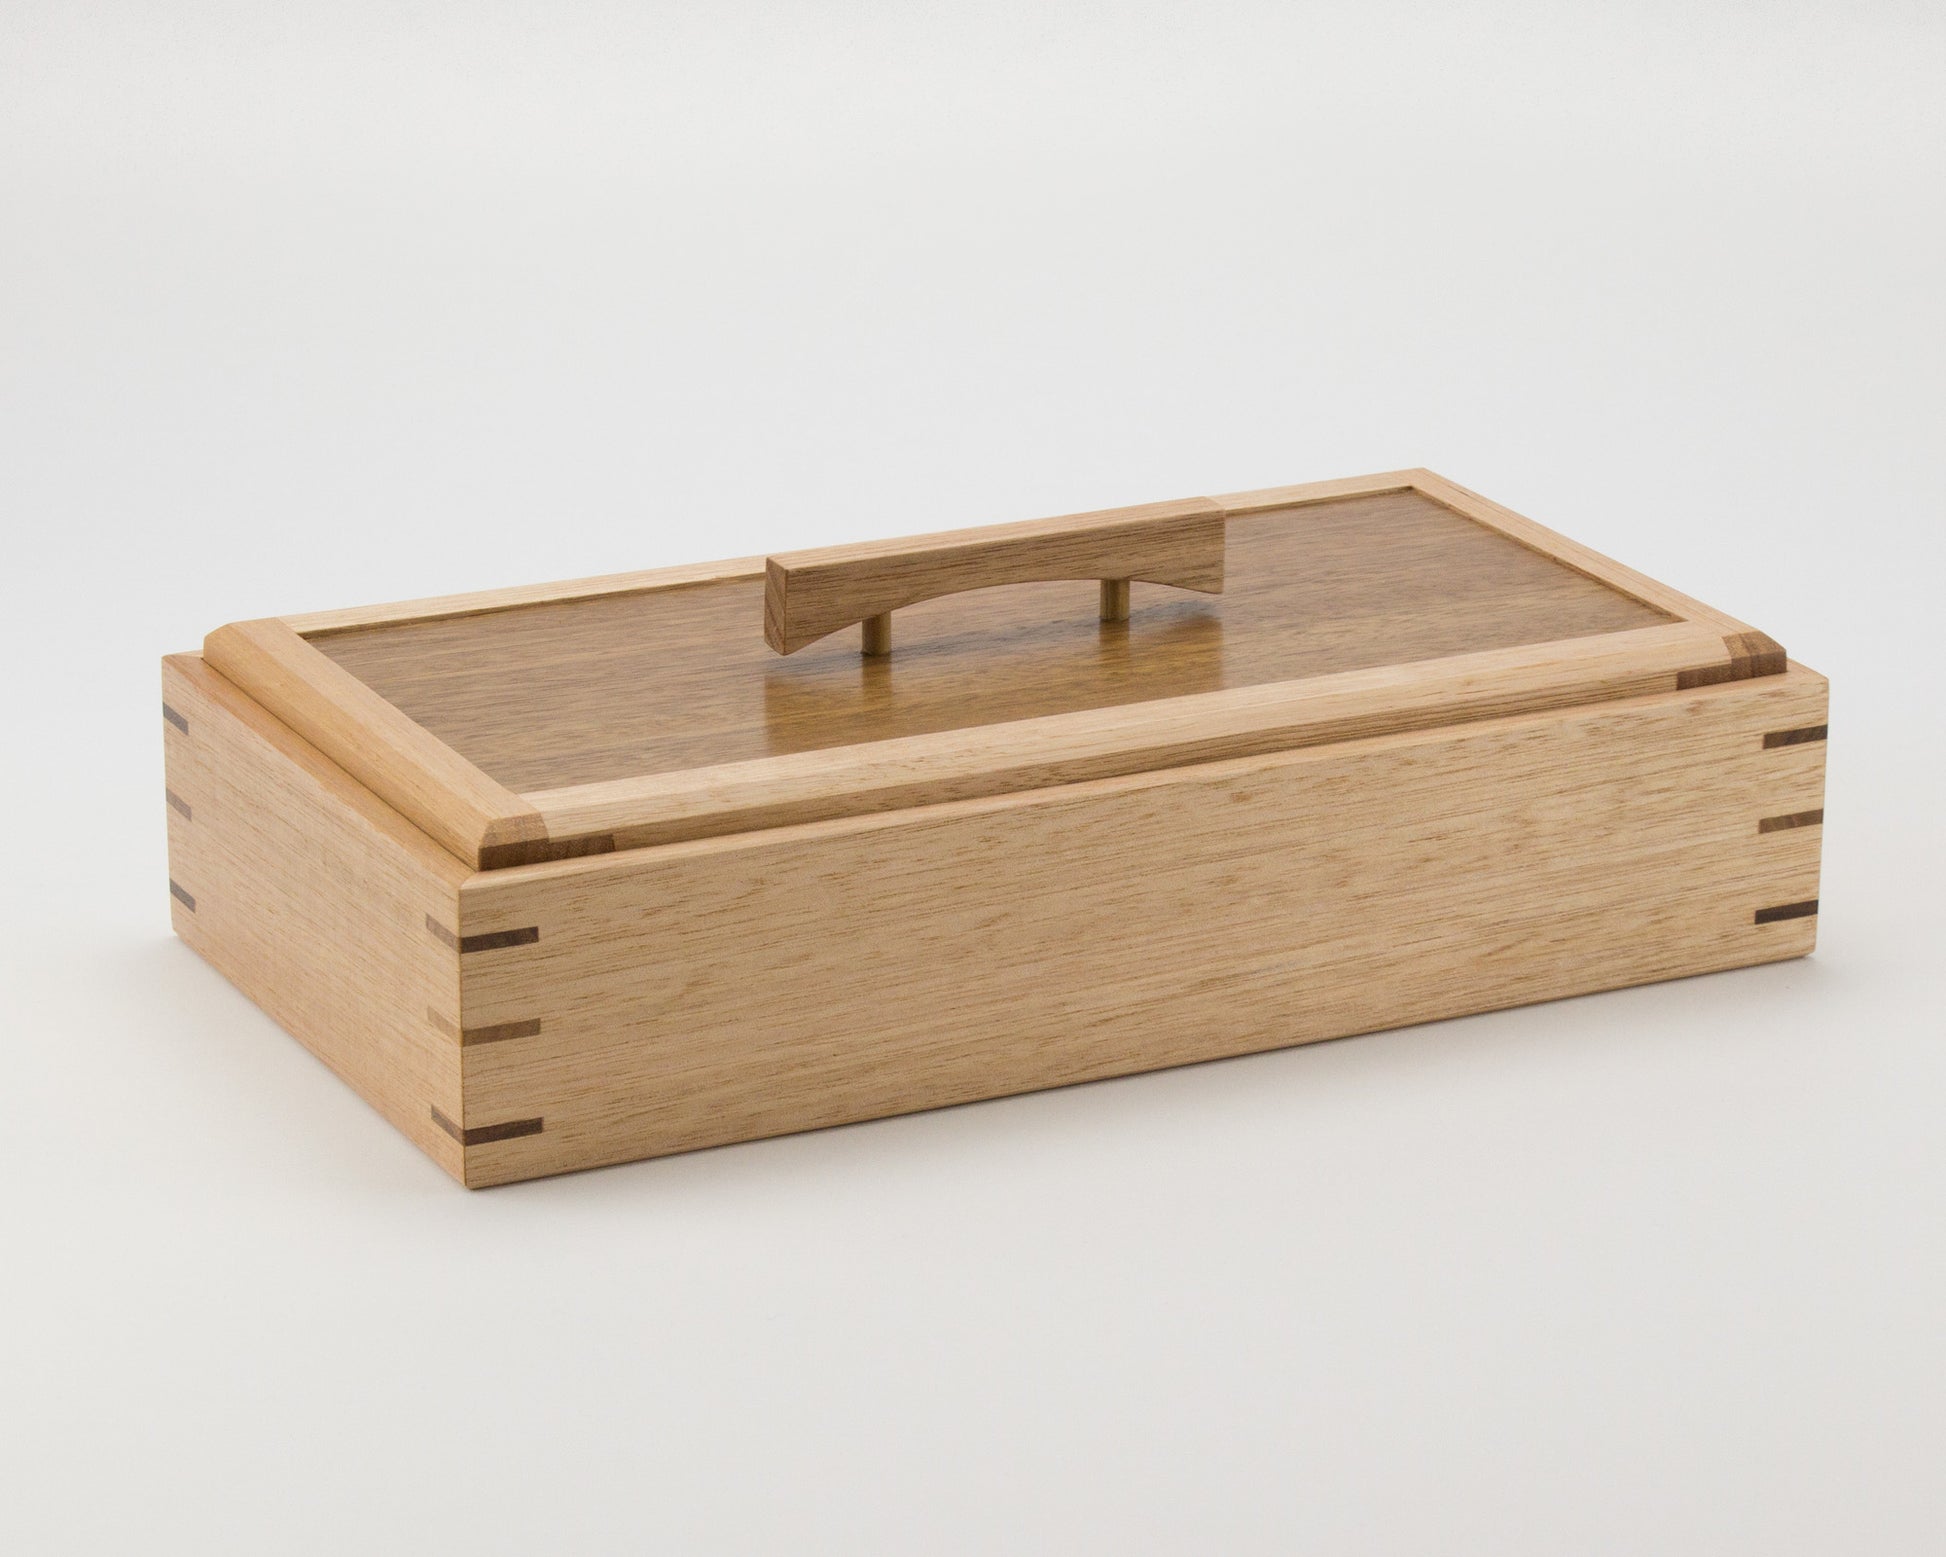 Wooden Keepsake Box handcrafted from Tasmanian Oak & Spotted Gum